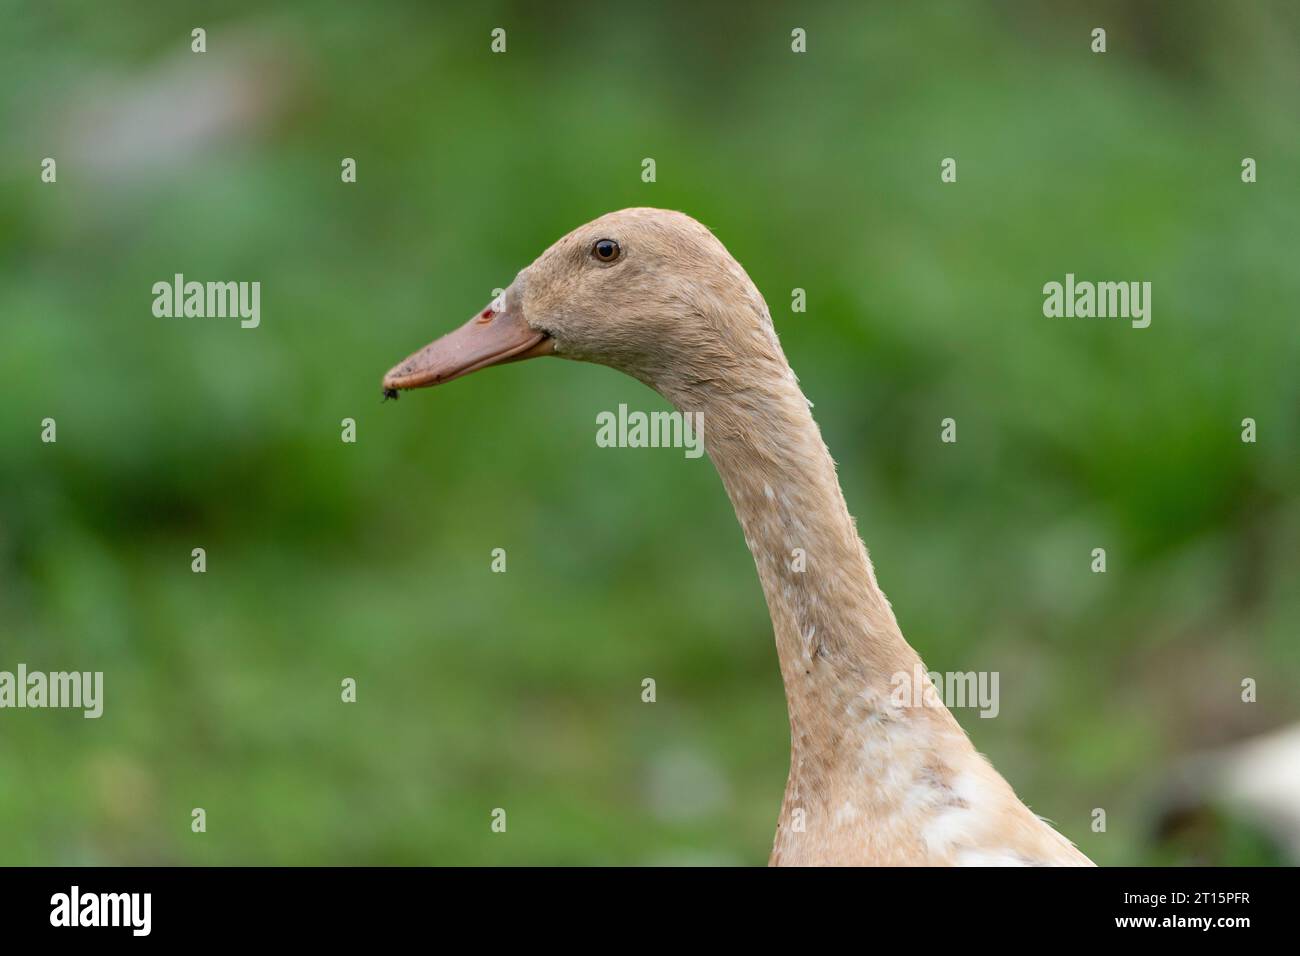 Indian runner duck Stock Photo